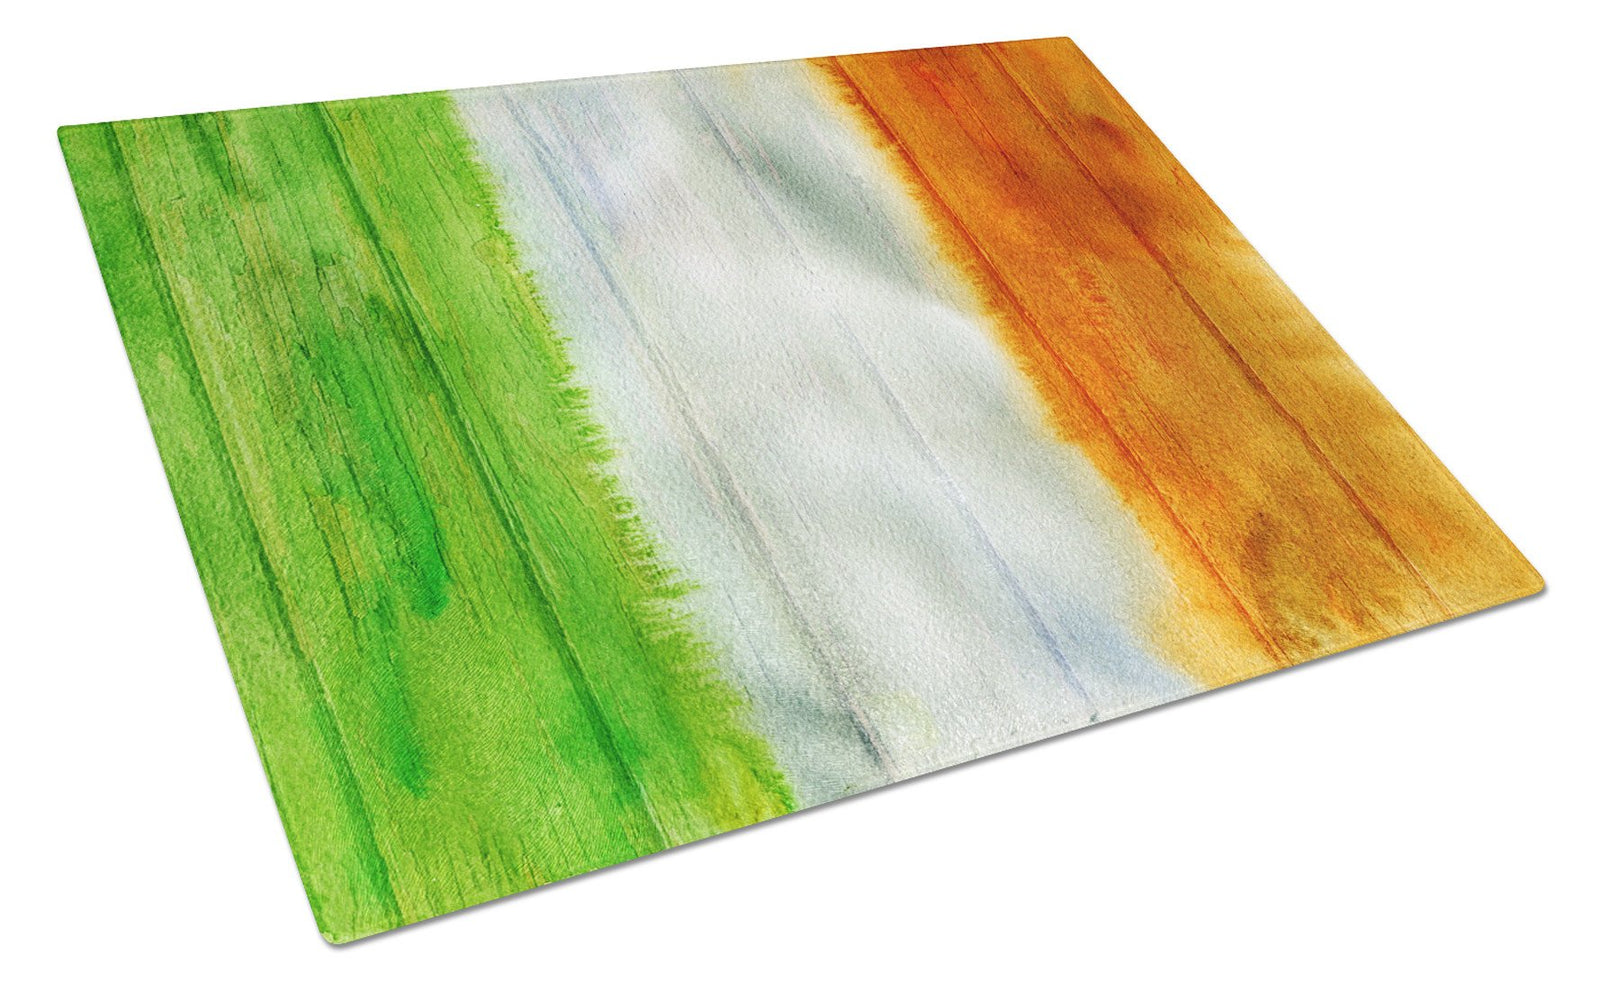 Irish Flag on Wood Glass Cutting Board Large BB5753LCB by Caroline's Treasures